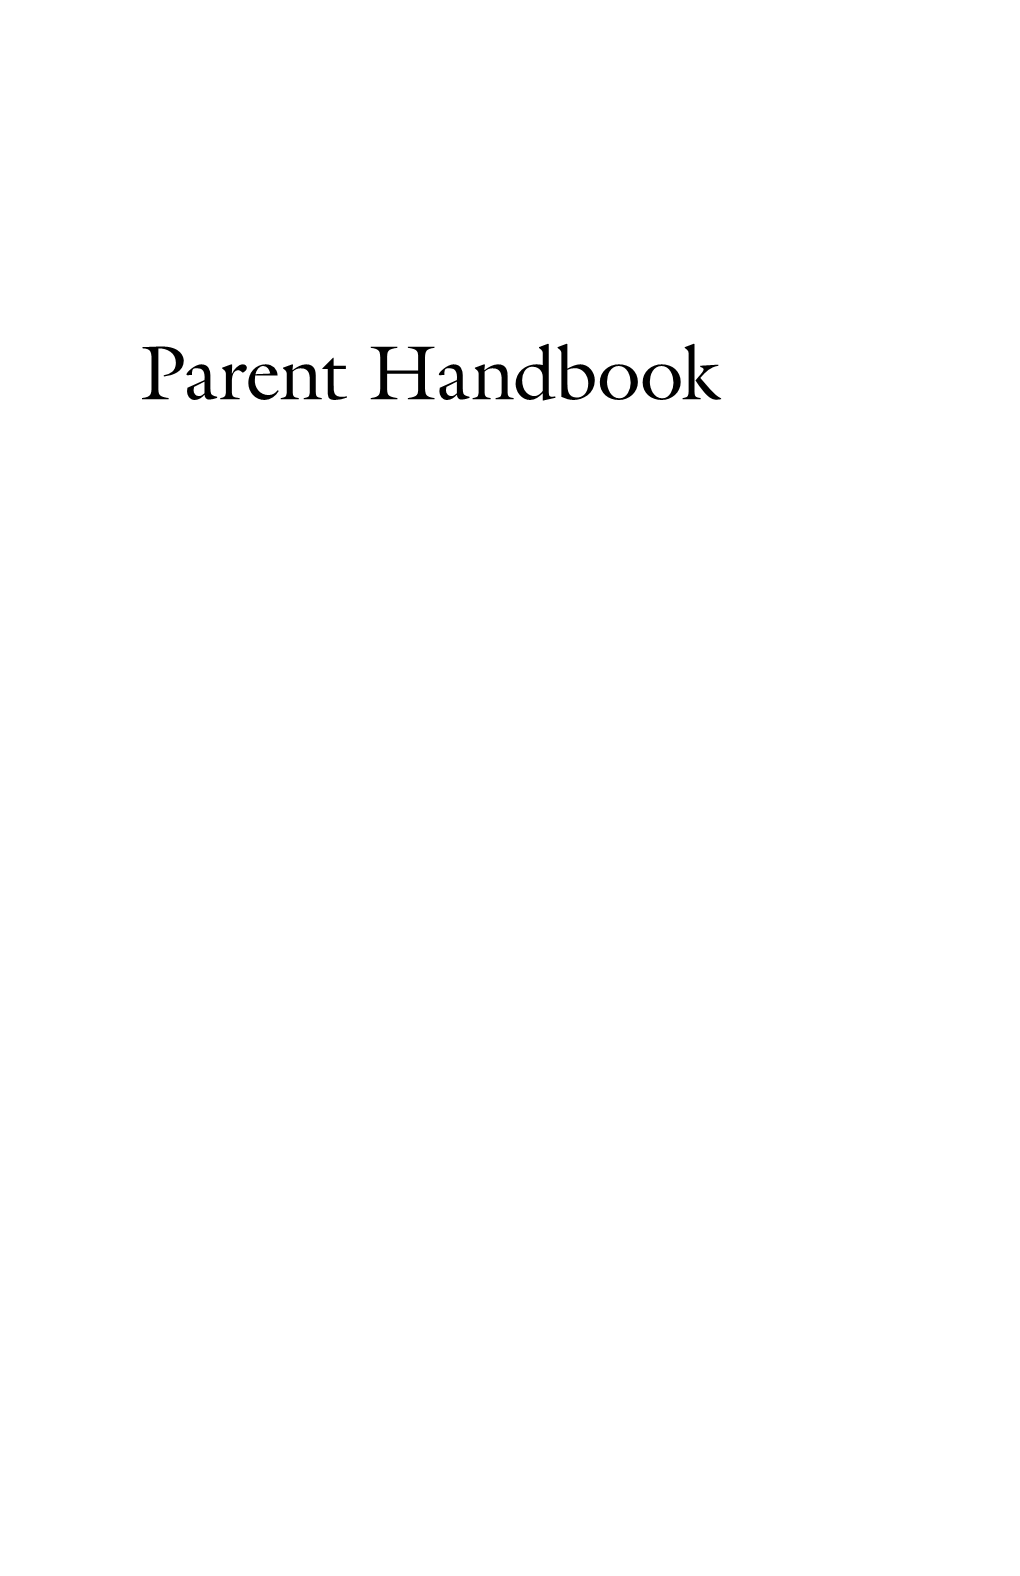 Parent Handbook Table of Contents